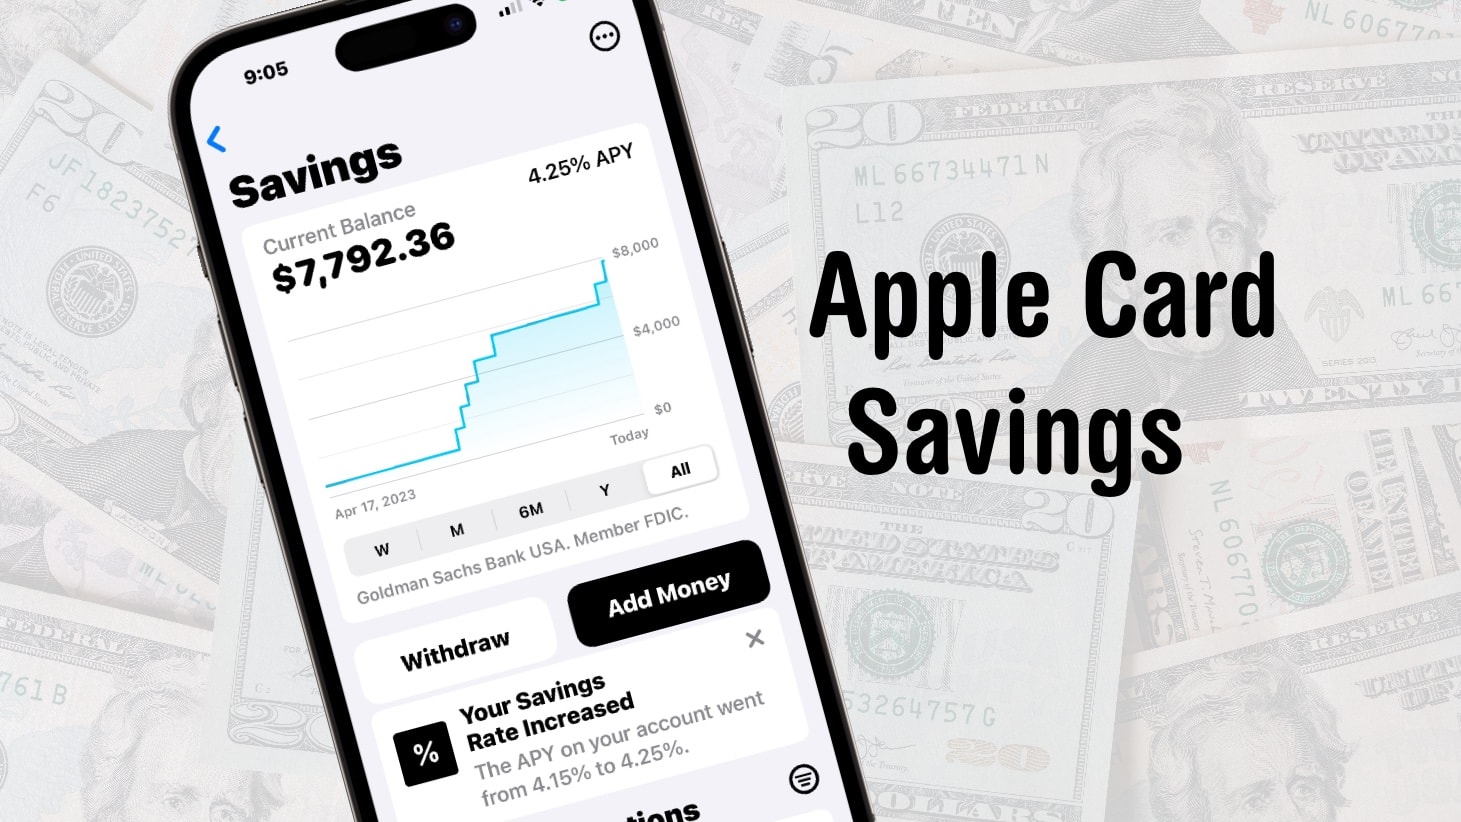 Apple Card Savings account